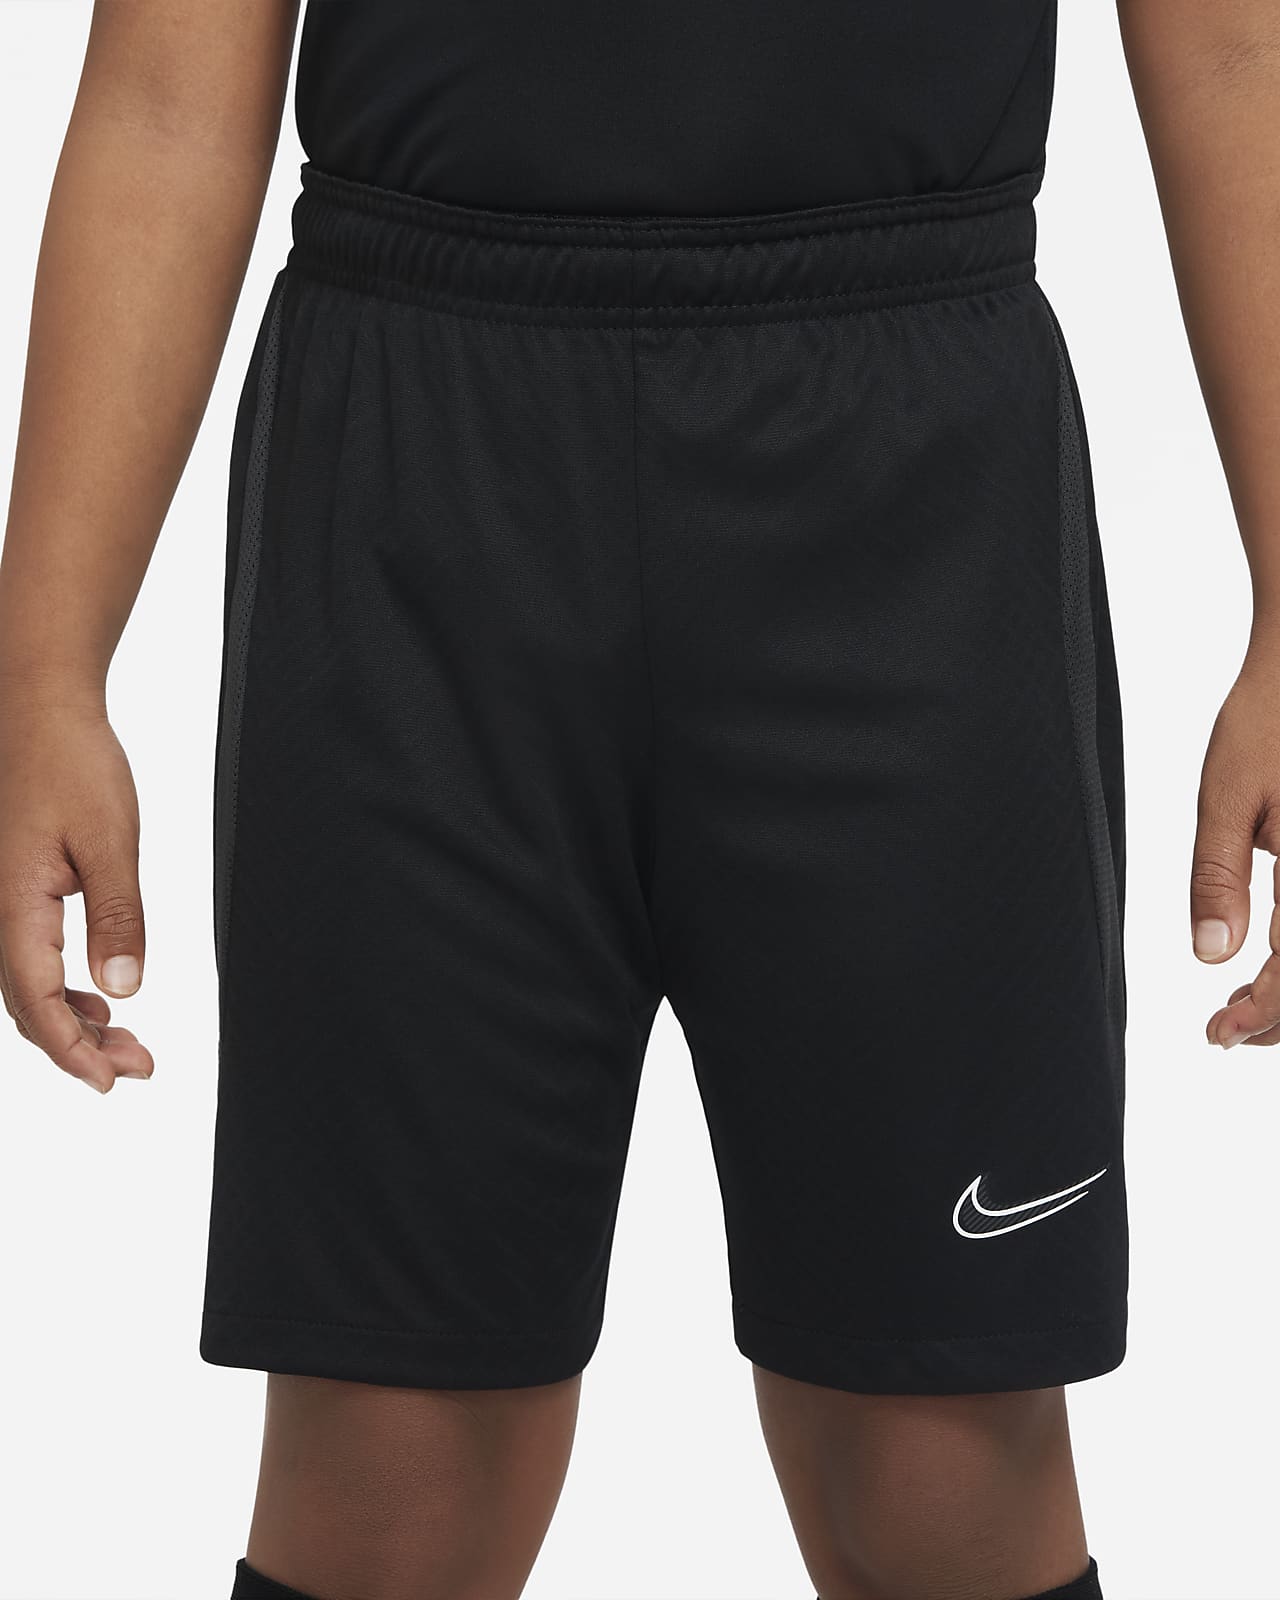 Comparar guardarropa Mamut Nike Dri-FIT Strike Pantalón corto de fútbol - Niño/a. Nike ES